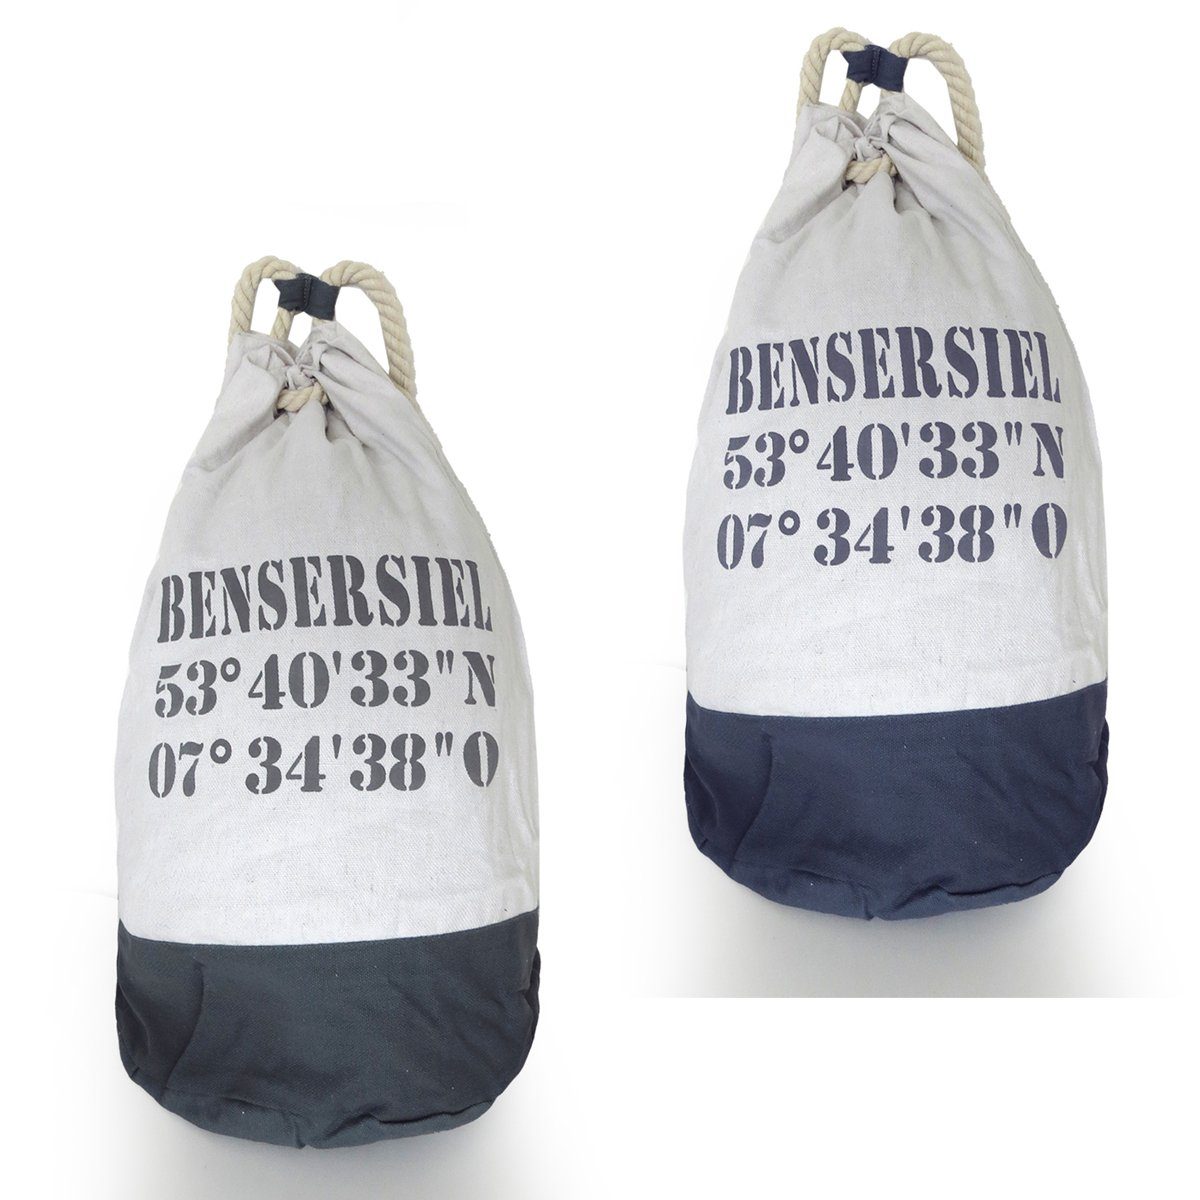 Sonia Originelli Umhängetasche XL Seesack "Bensersiel" Maritim Marinesack Bag